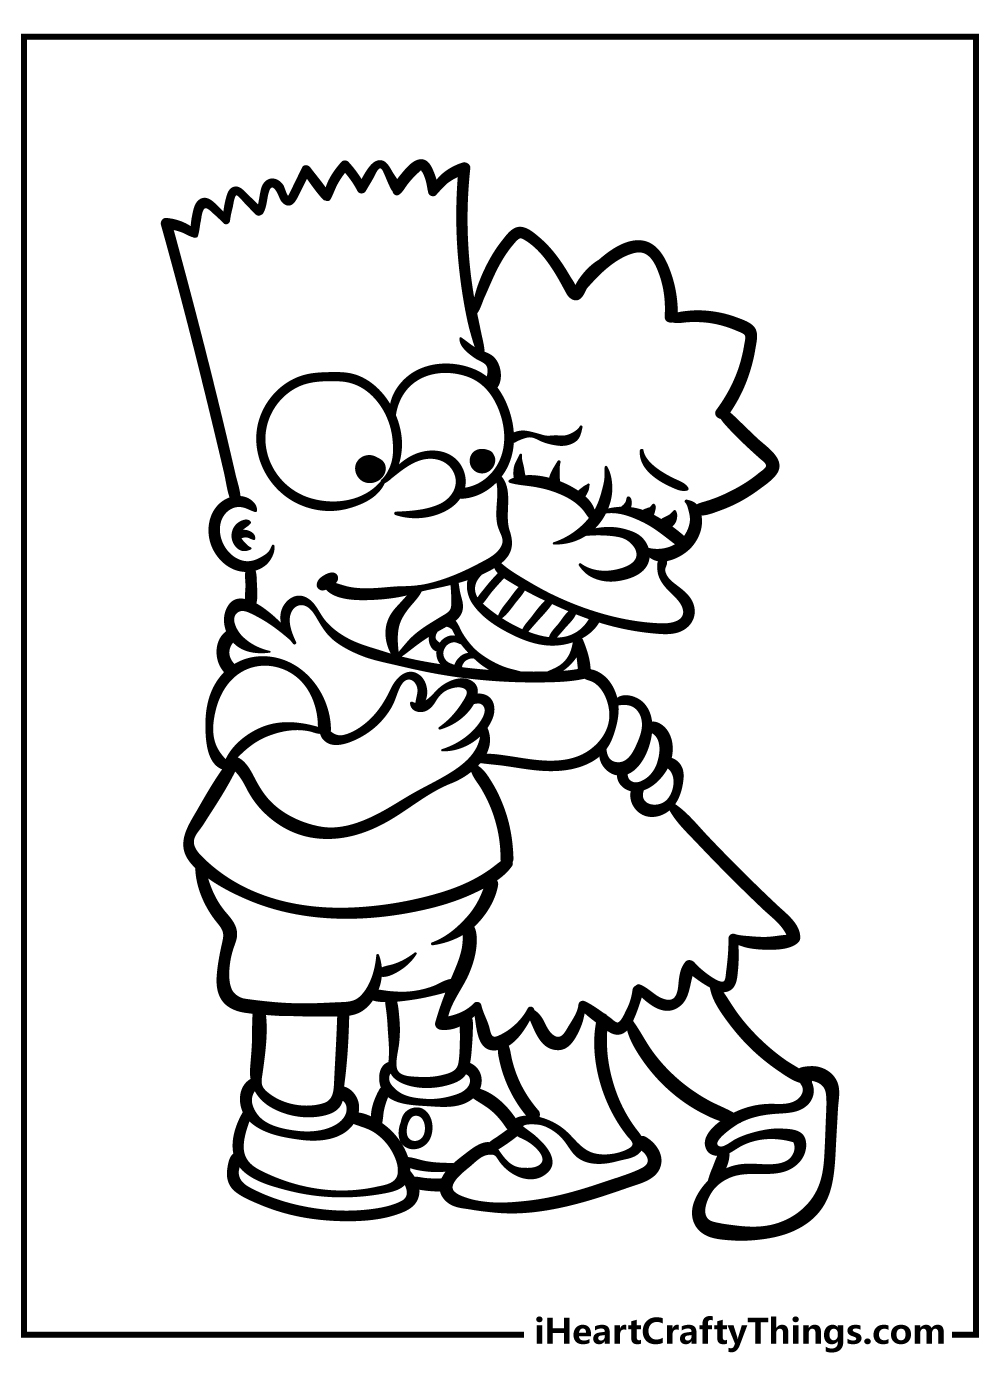 Simpsons Coloring Original Sheet for children free download